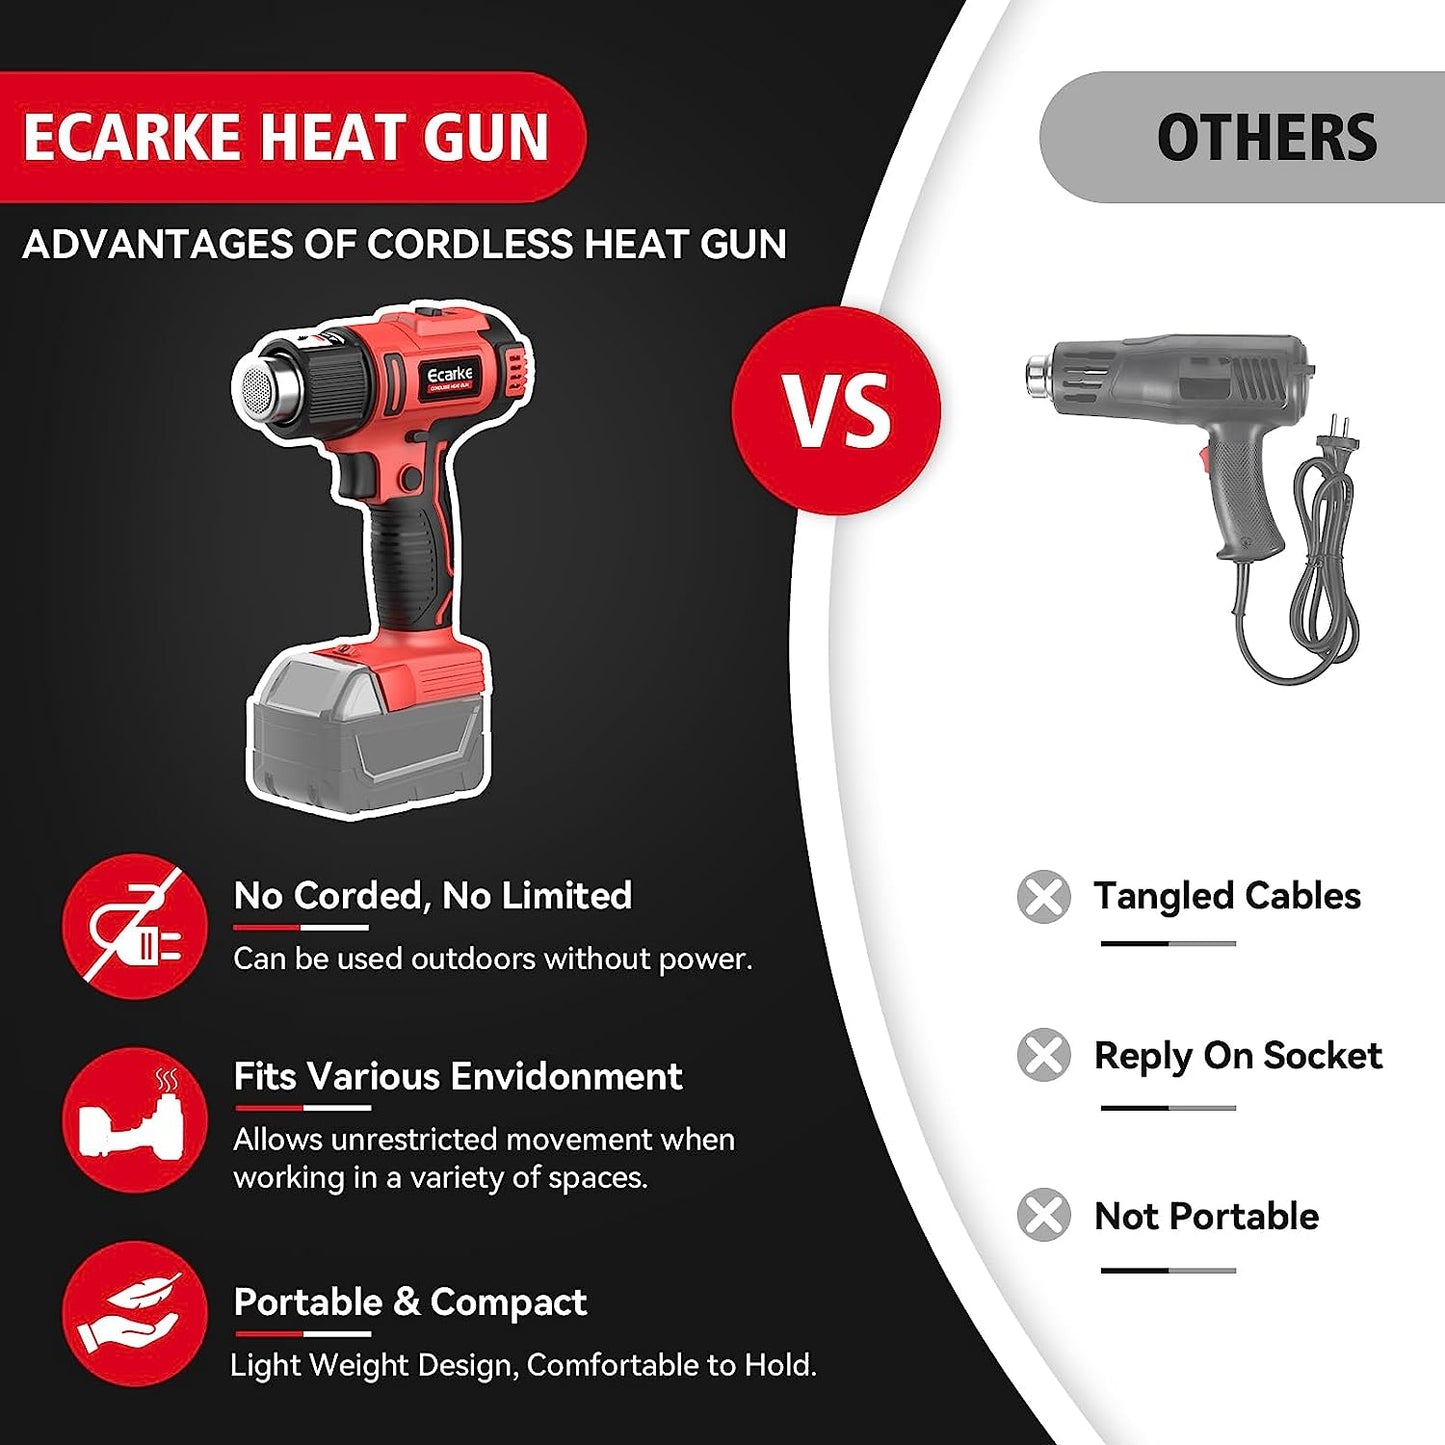 Cordless Heat Gun for Milwaukee M18 18V Battery - Adjustable Temperature